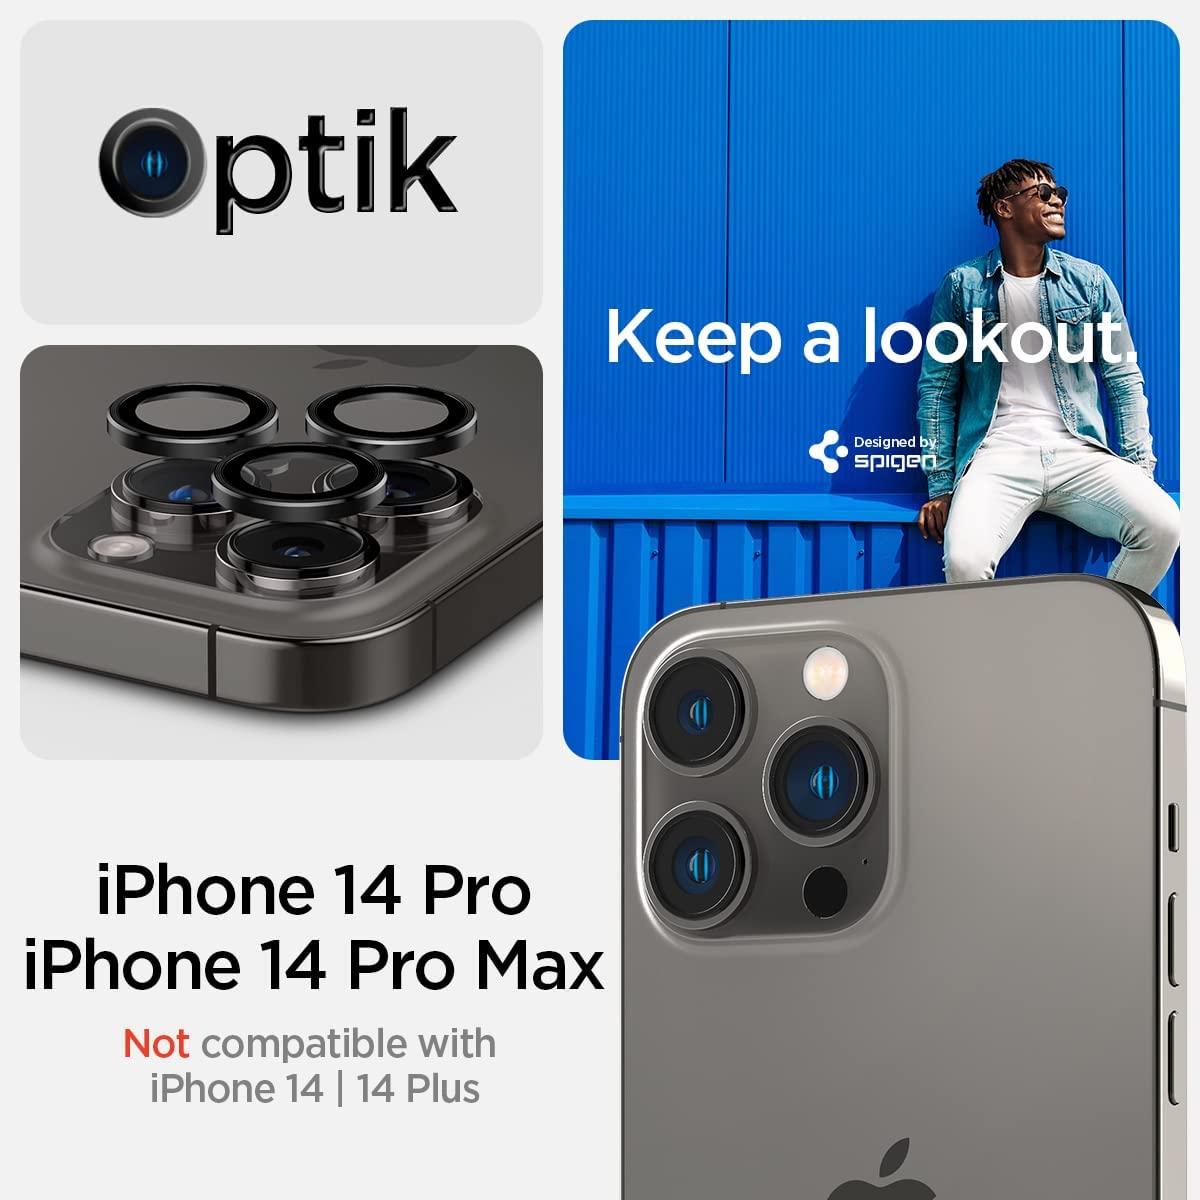 Захисне скло Spigen для камери iPhone 14 Pro/14 Pro Max — Optik Pro (2 шт.), Black (AGL05205)